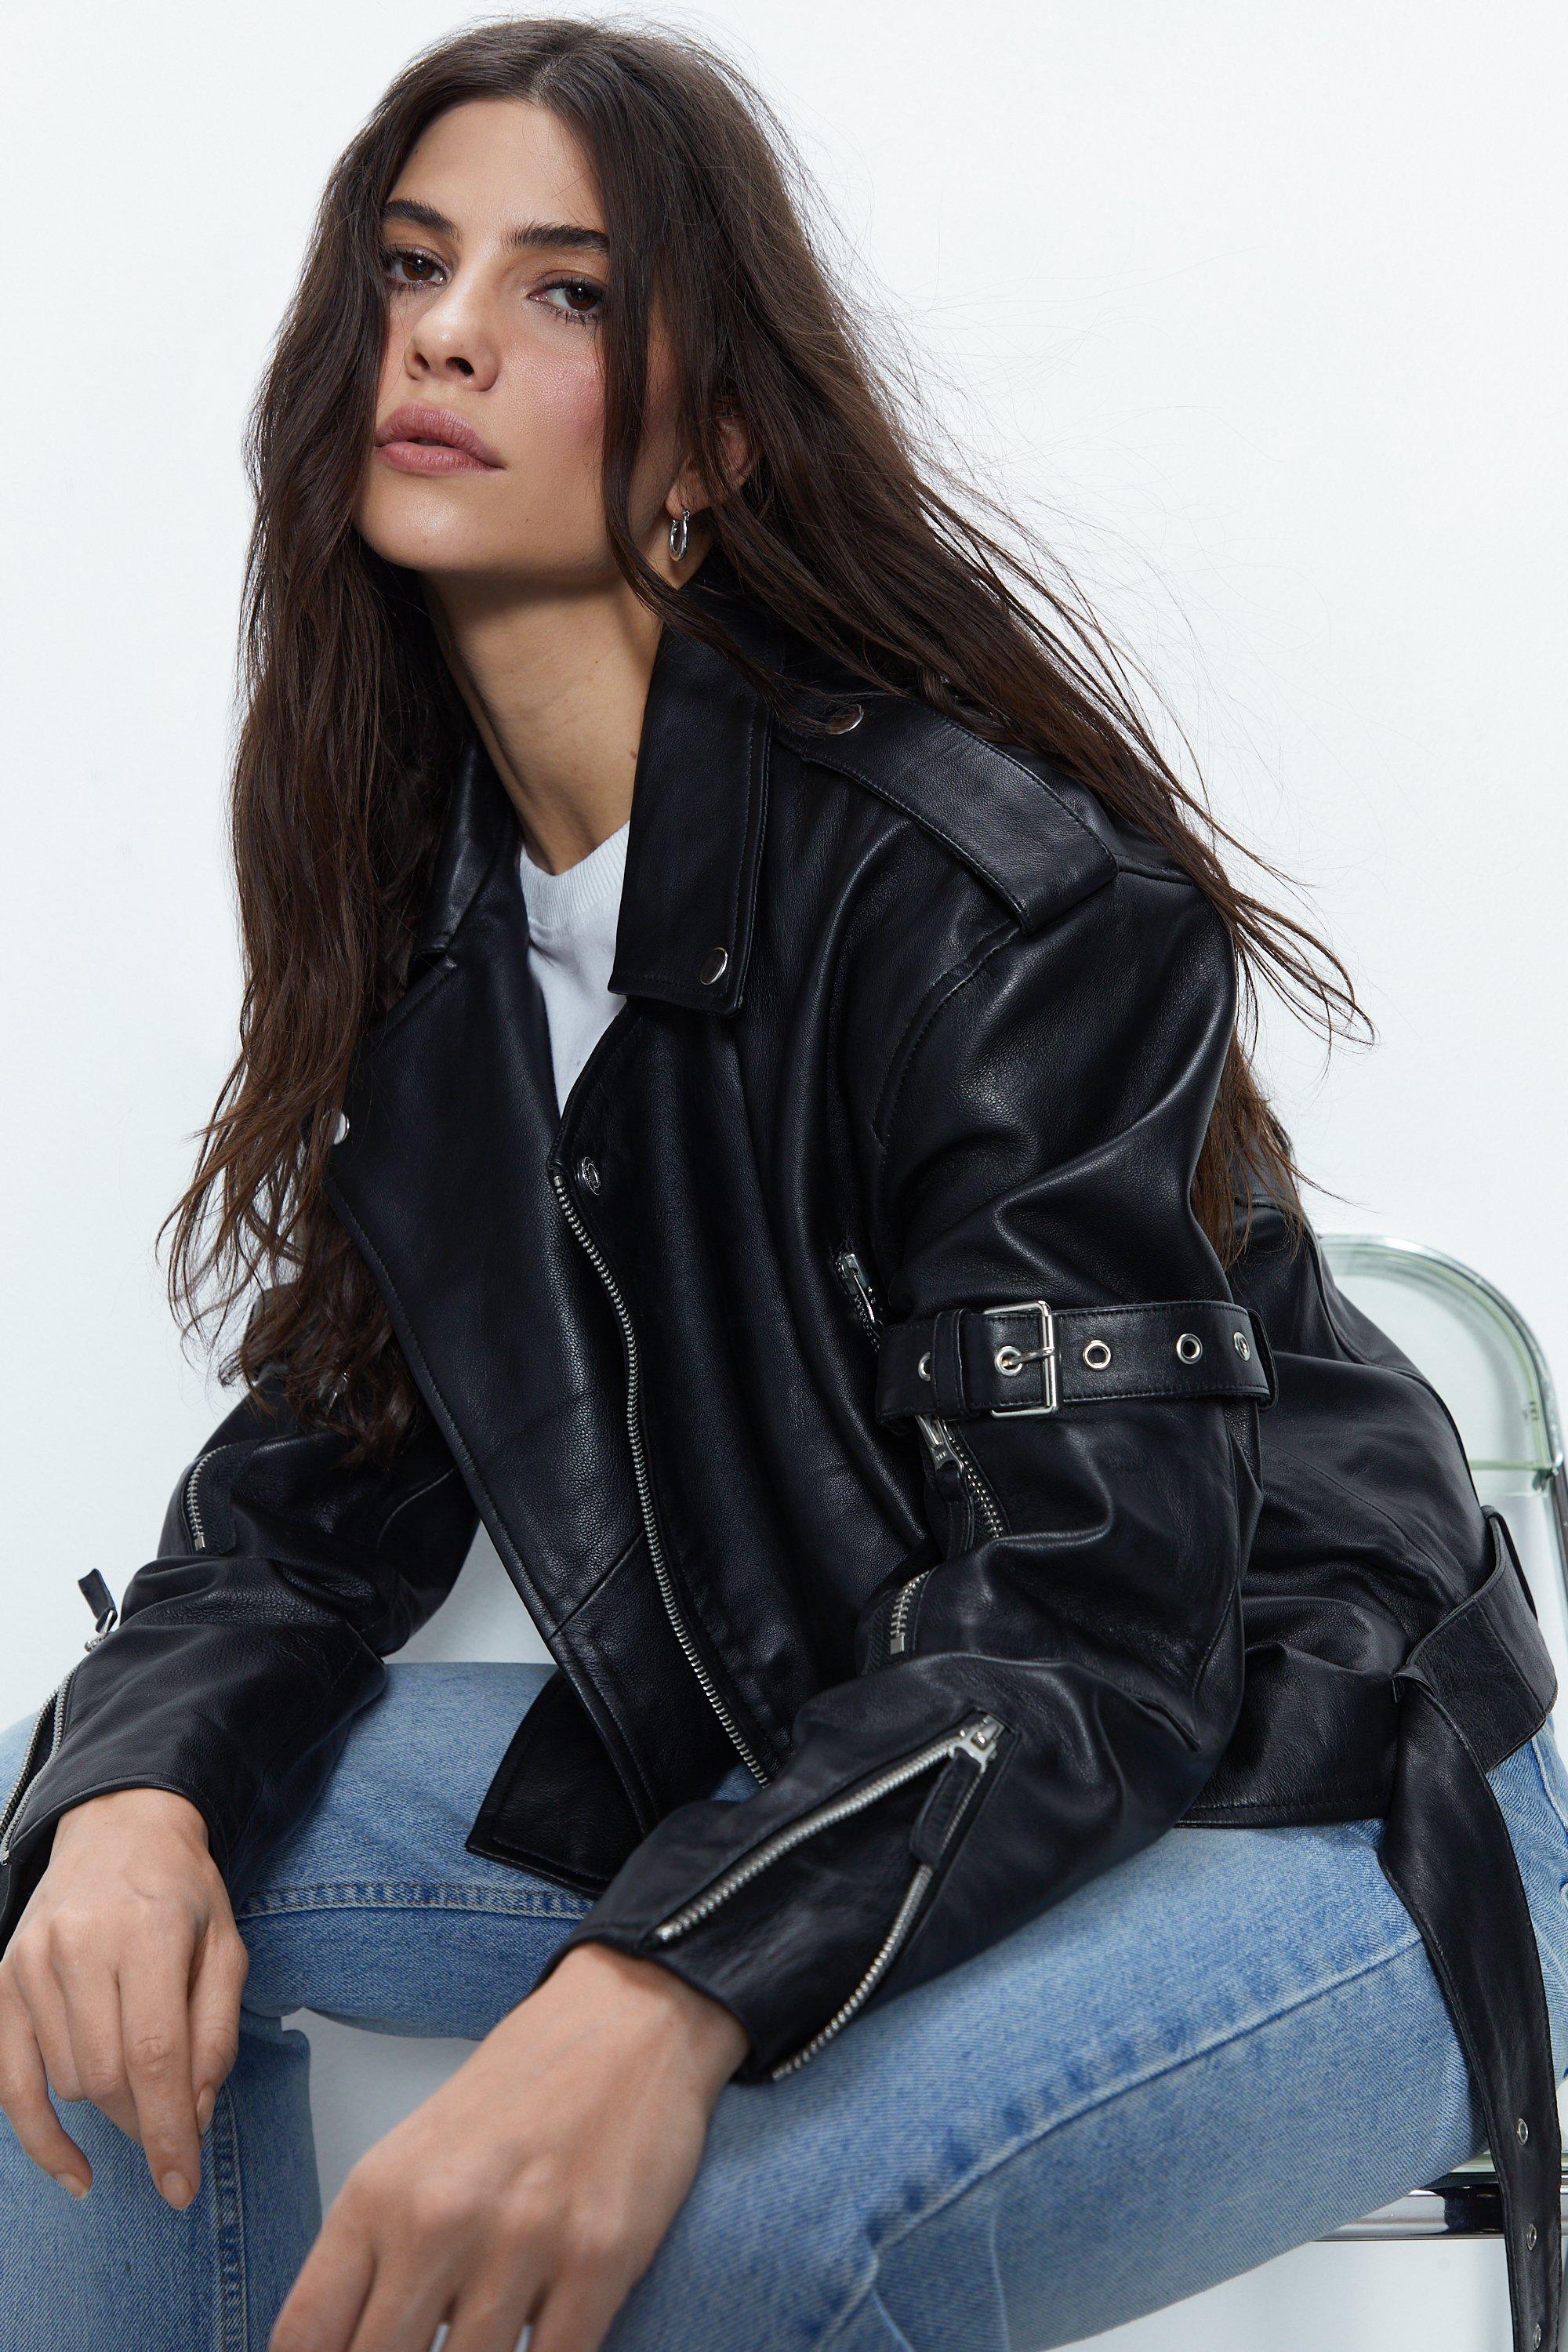 Women's Black Leather Biker Jacket, White Print Playsuit, Black